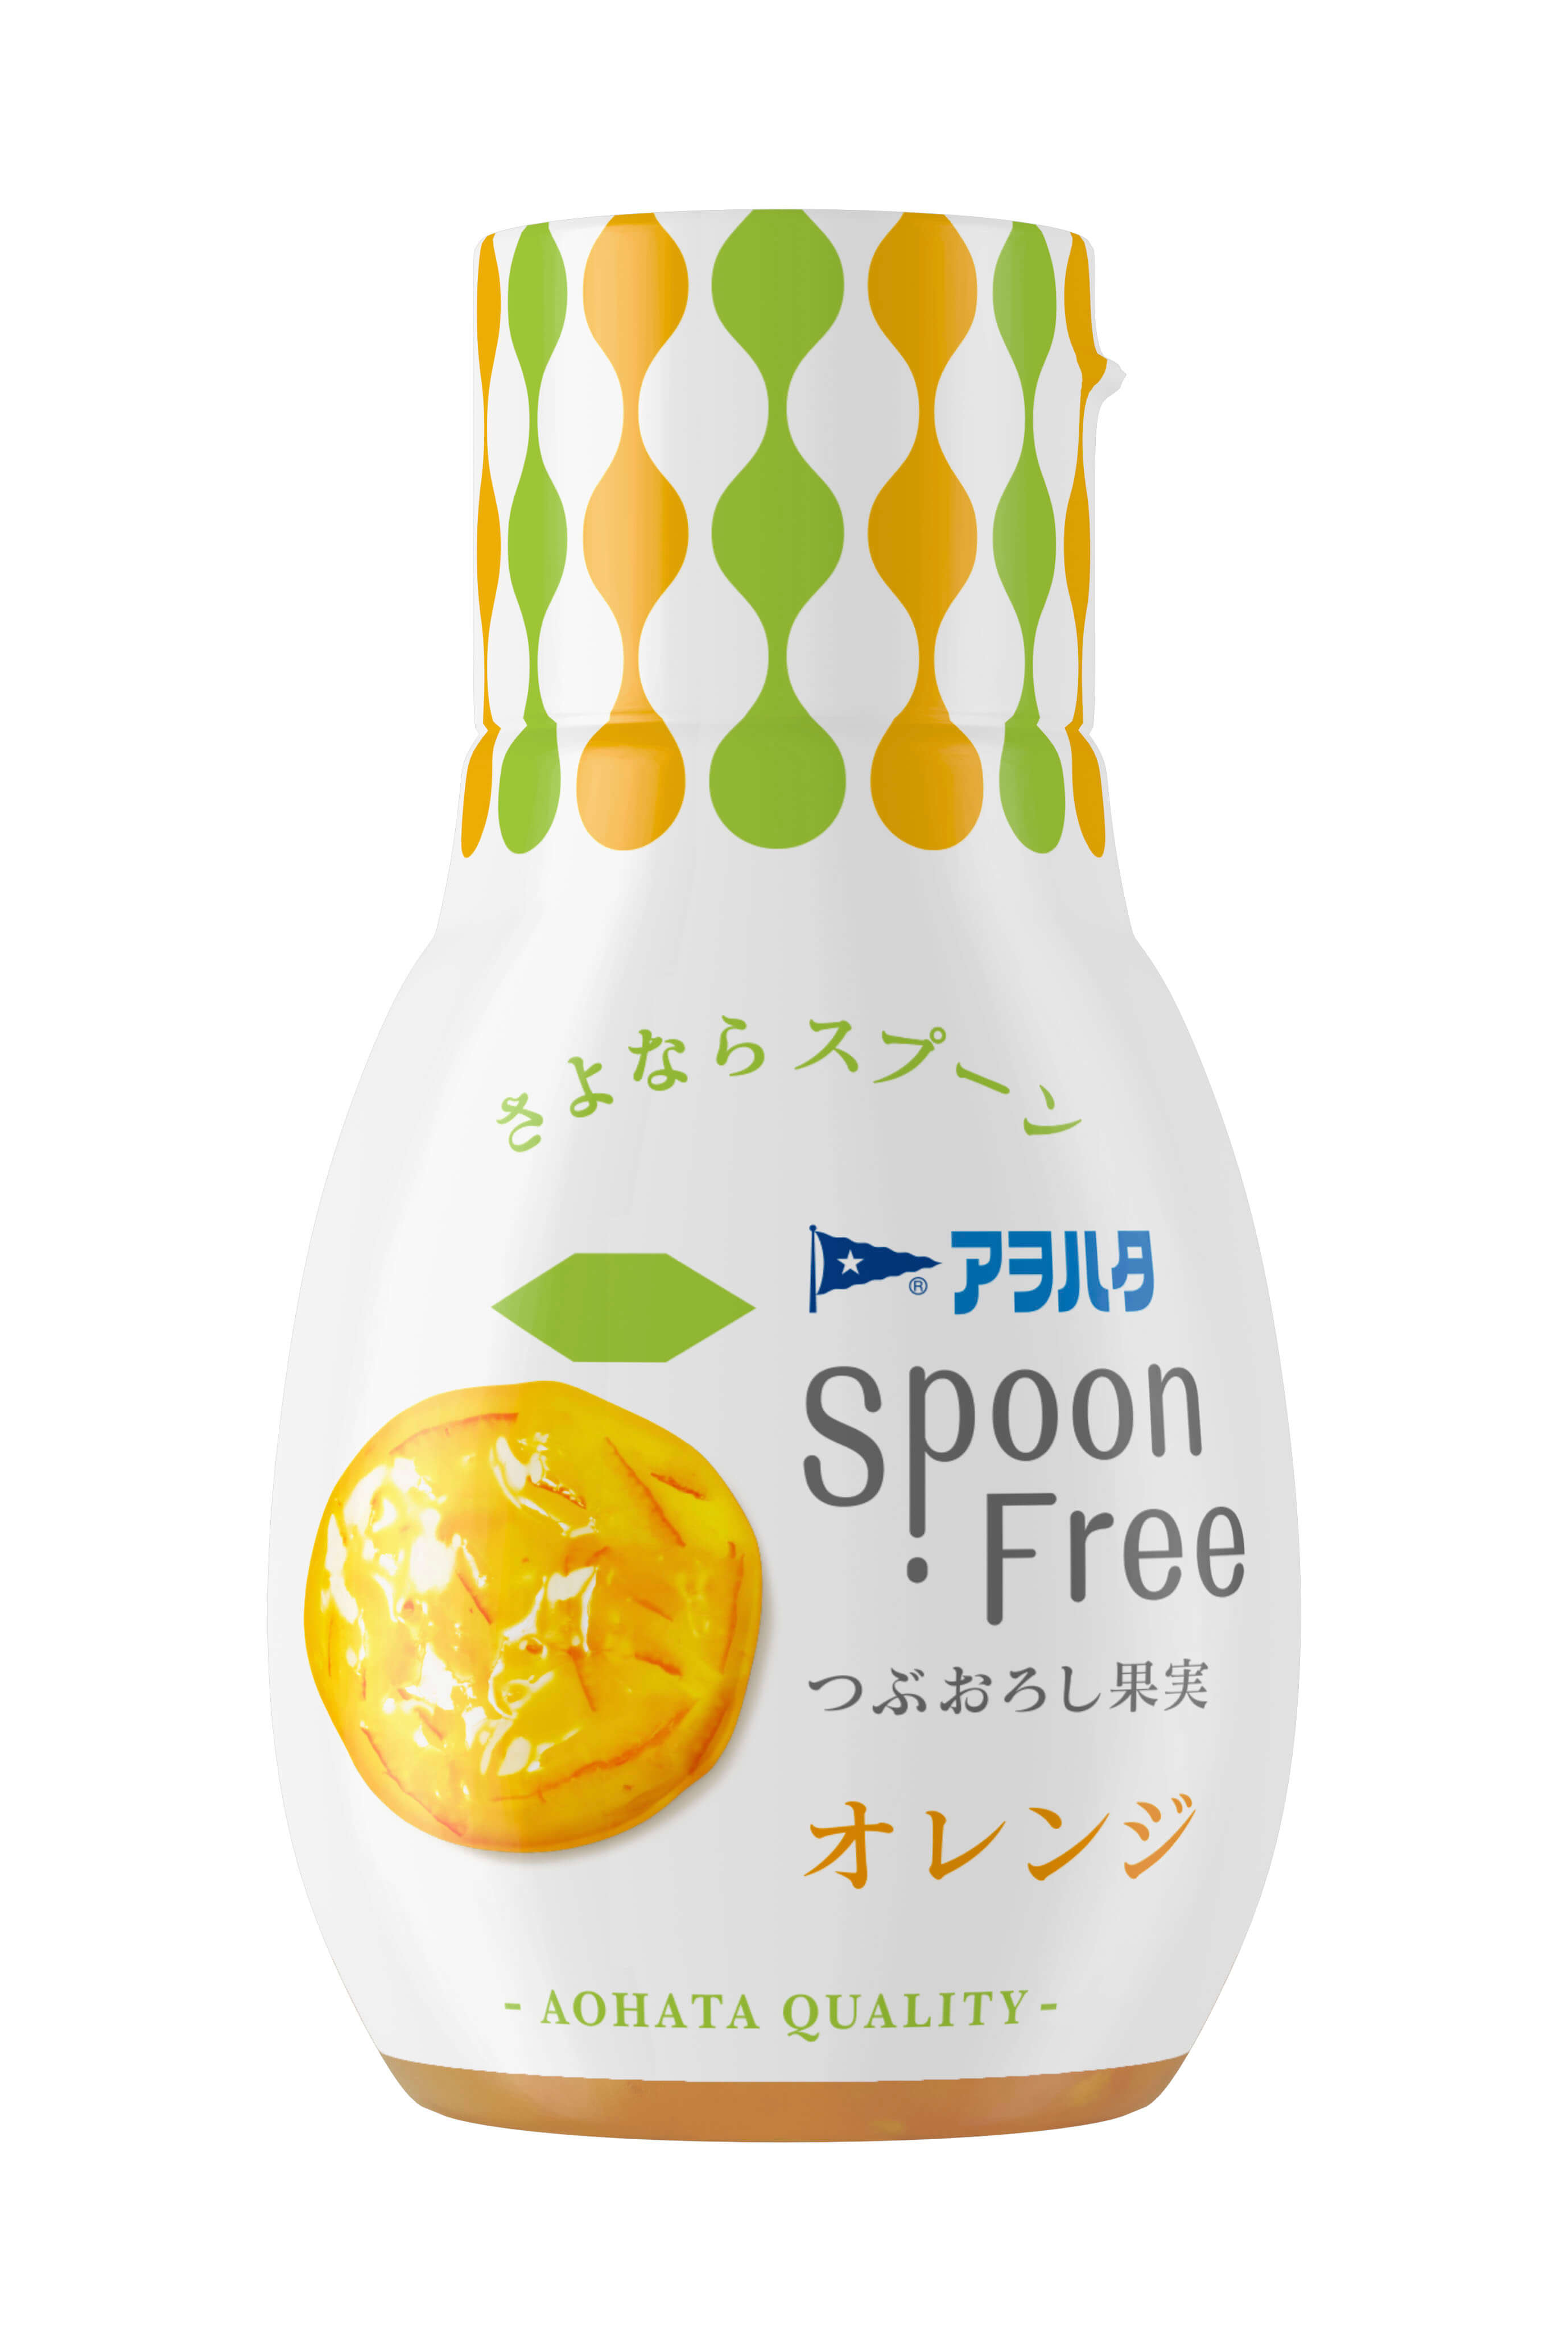 spoonfreeオレンジの商品画像